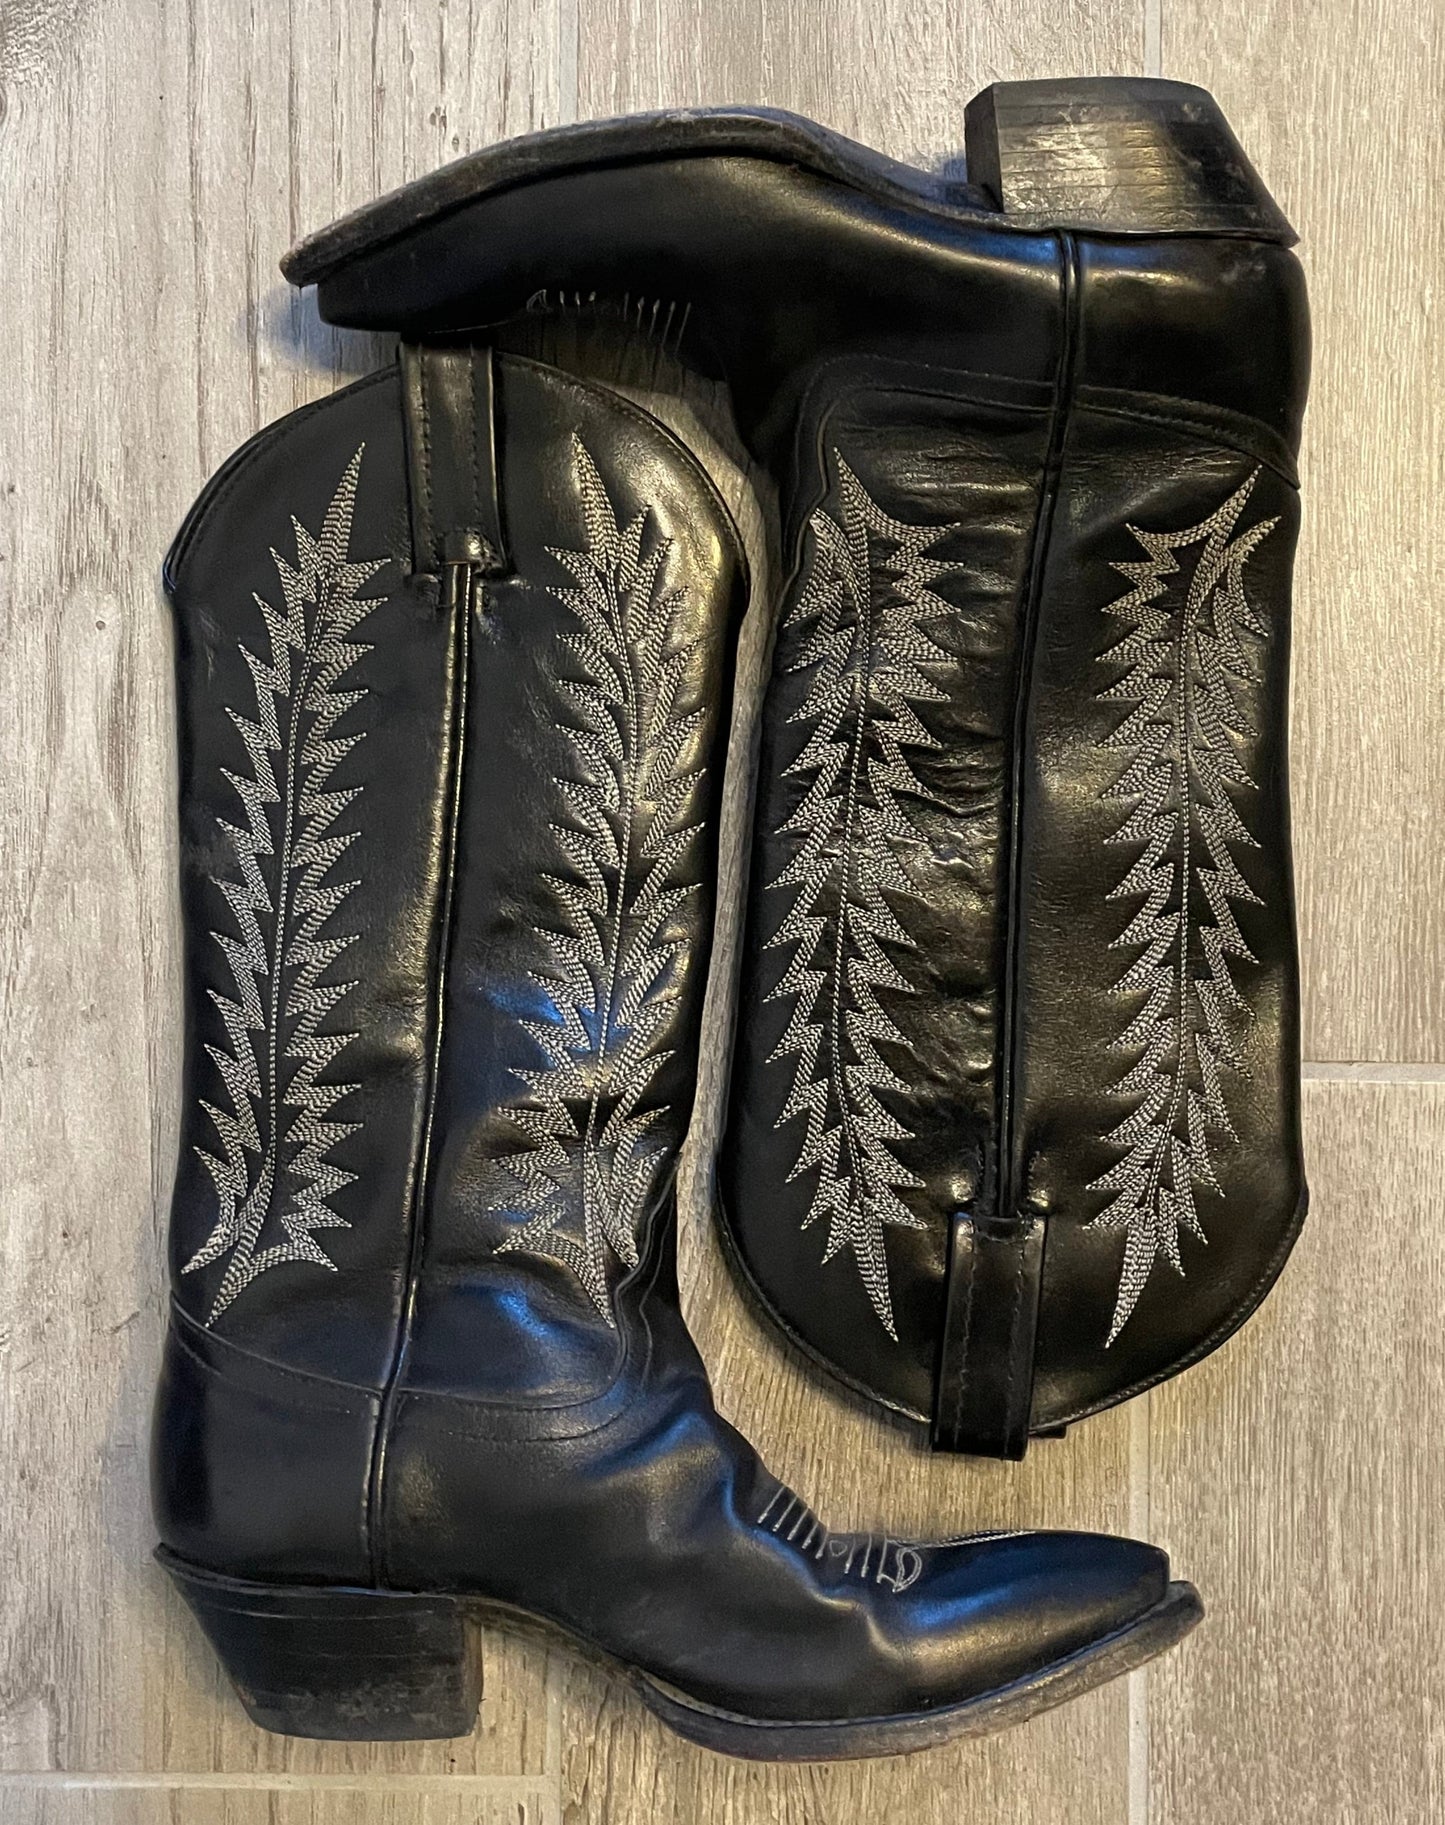 Vintage Tony Lama Black & White Cowgirl Boots